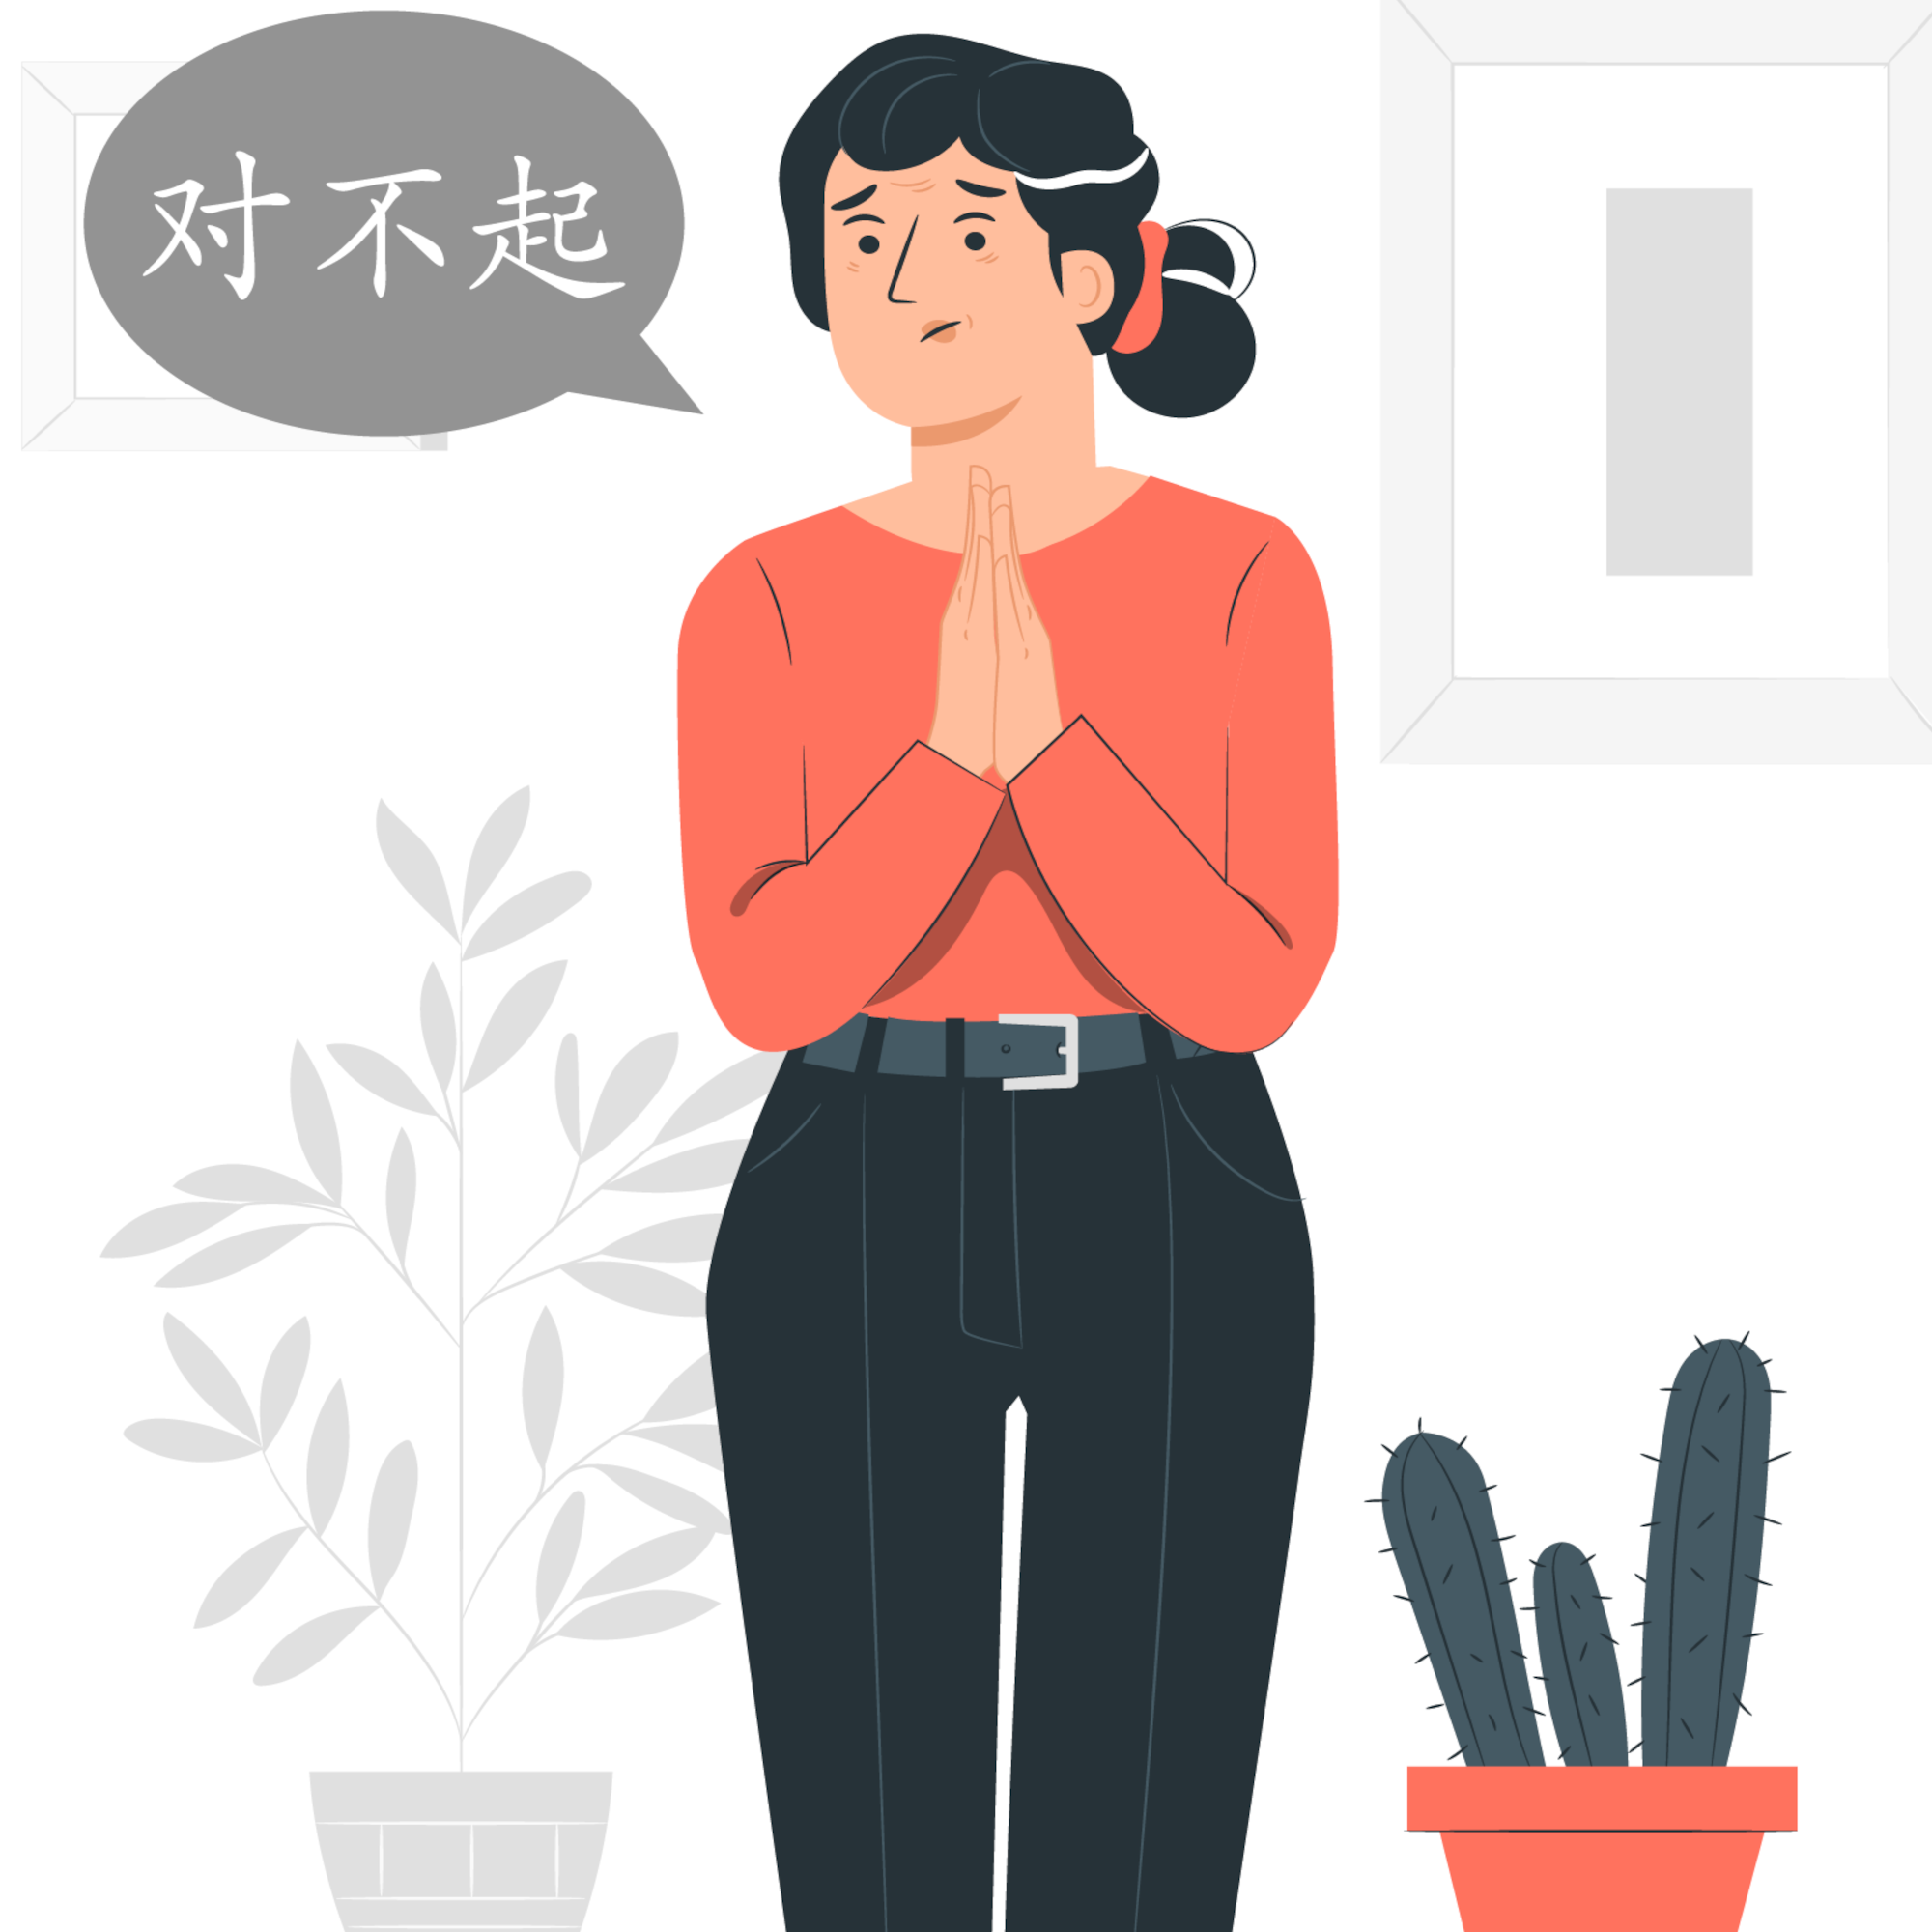 Bagaimana Ya Cara Meminta Maaf dalam Bahasa Mandarin? Yuk Belajar Bersama!